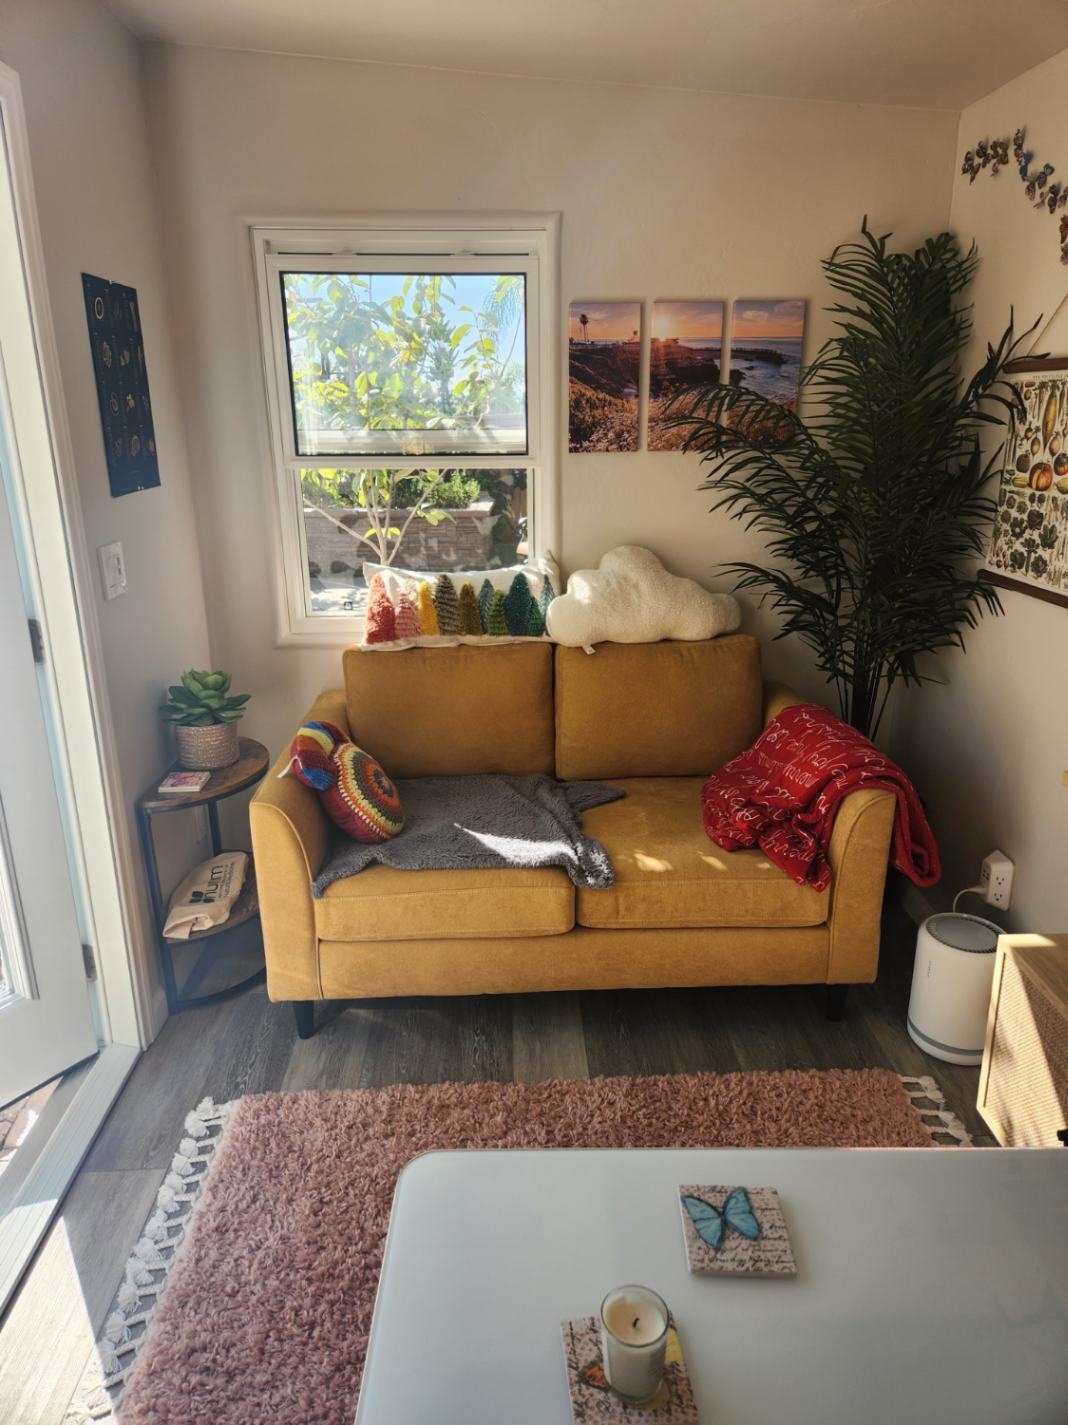 Interior view of 8’x12' Urban Studio Home Studio located in San Diego, California - Summerwood Pro